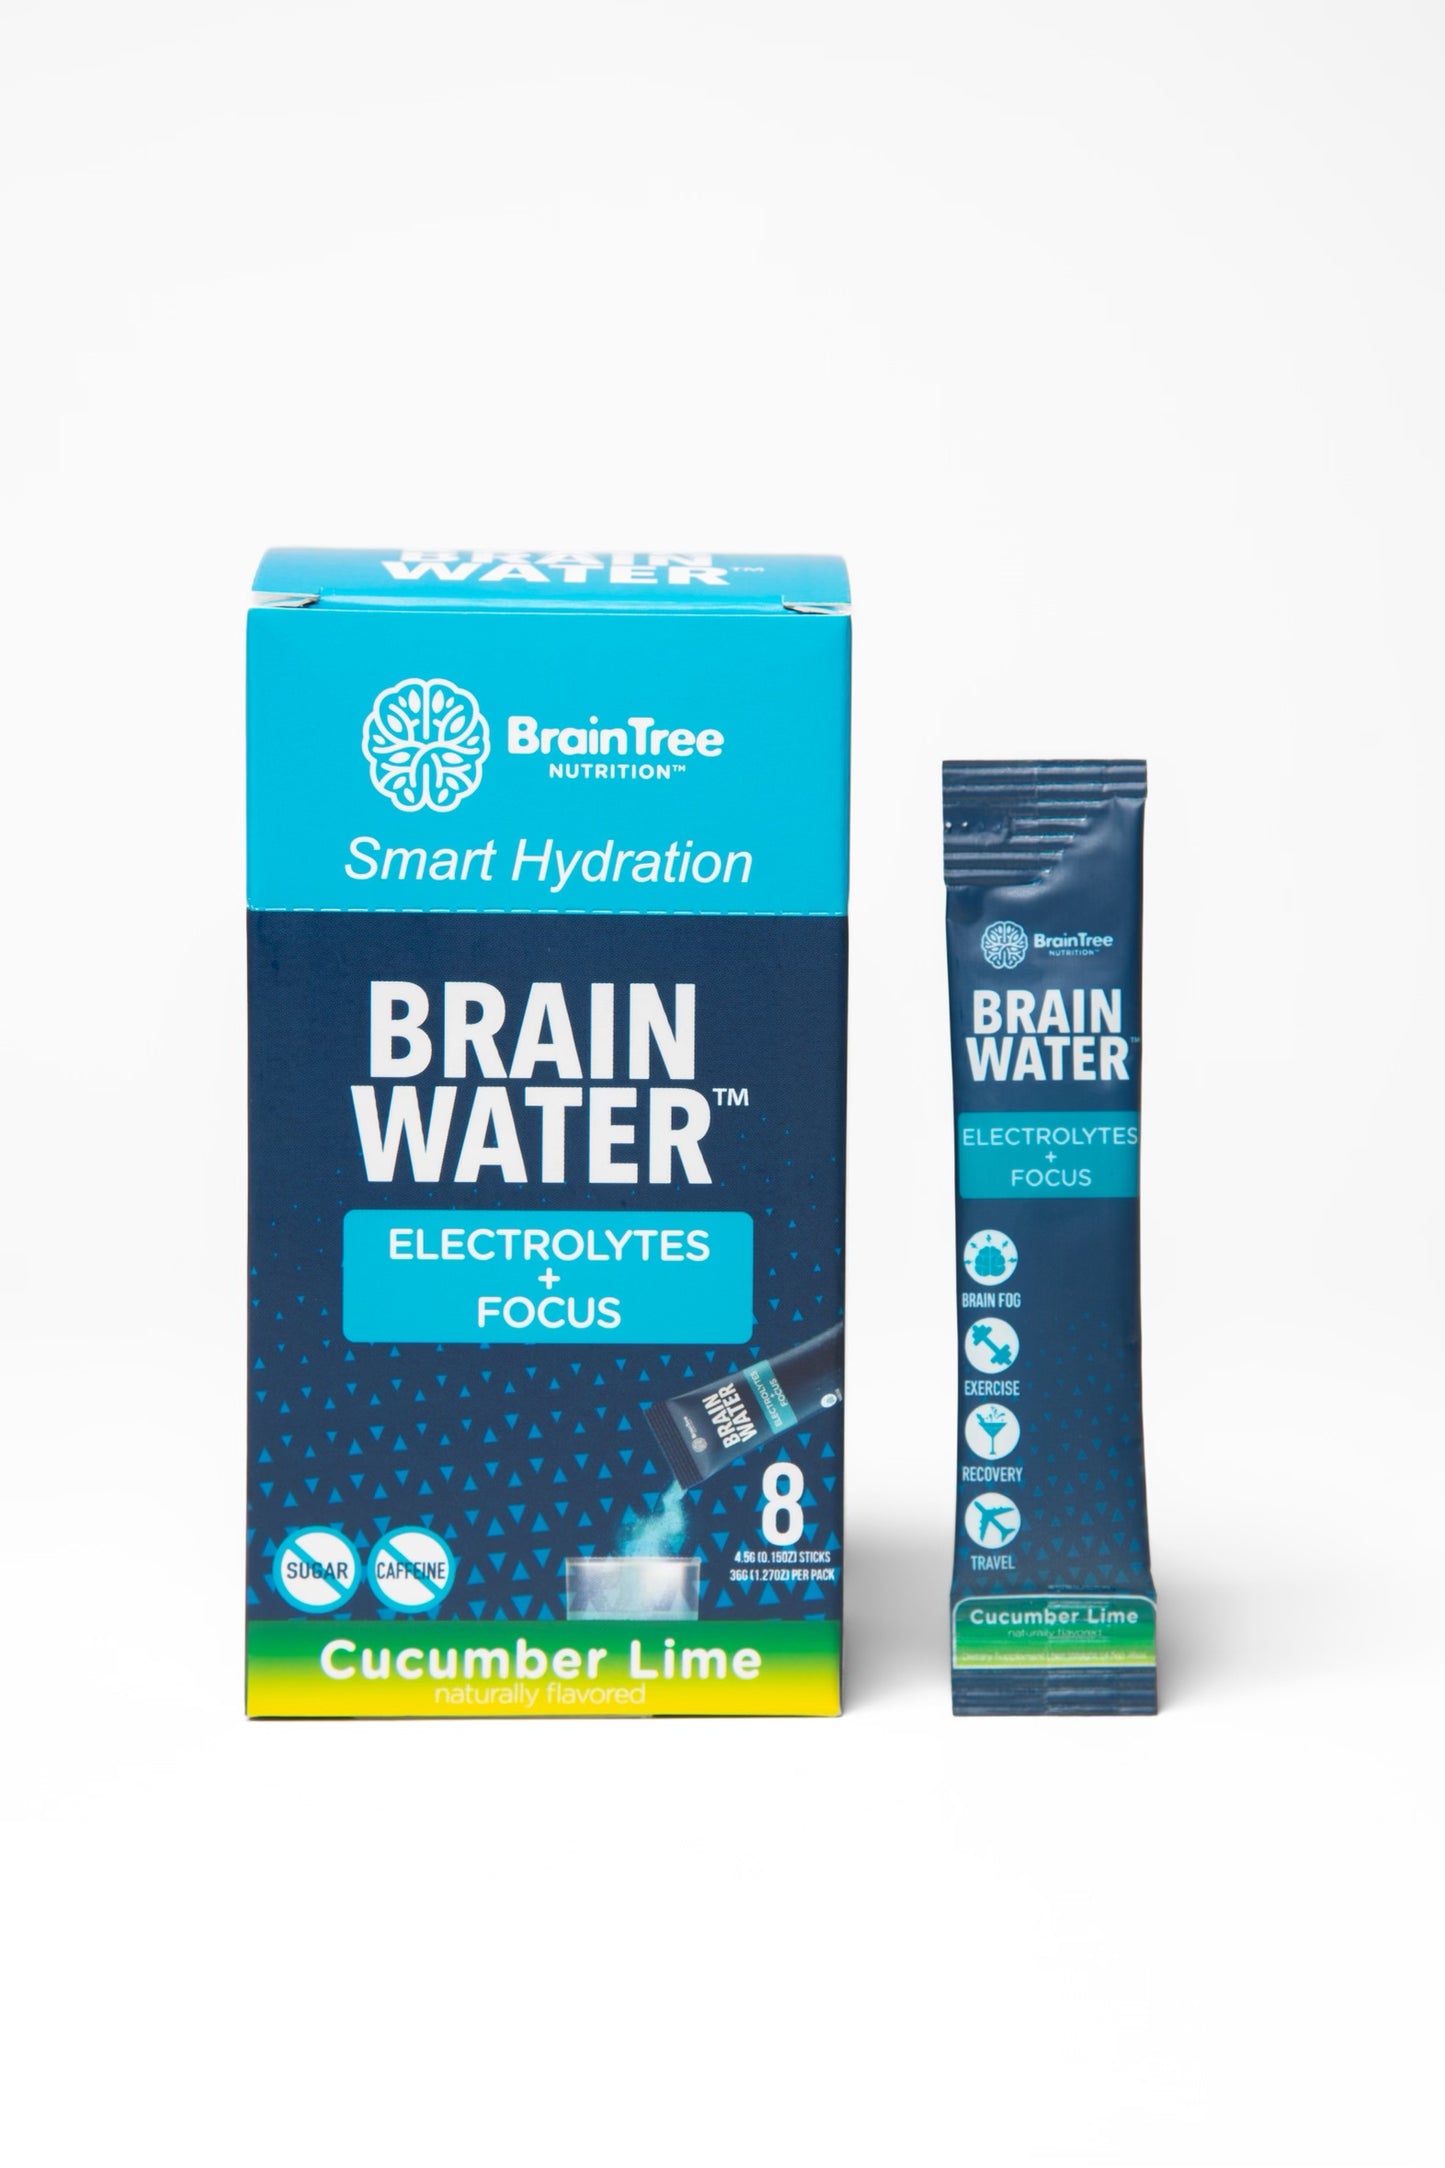 BrainTree Nutrition-Brain Water Electrolytes + Focus Cucumber Lime